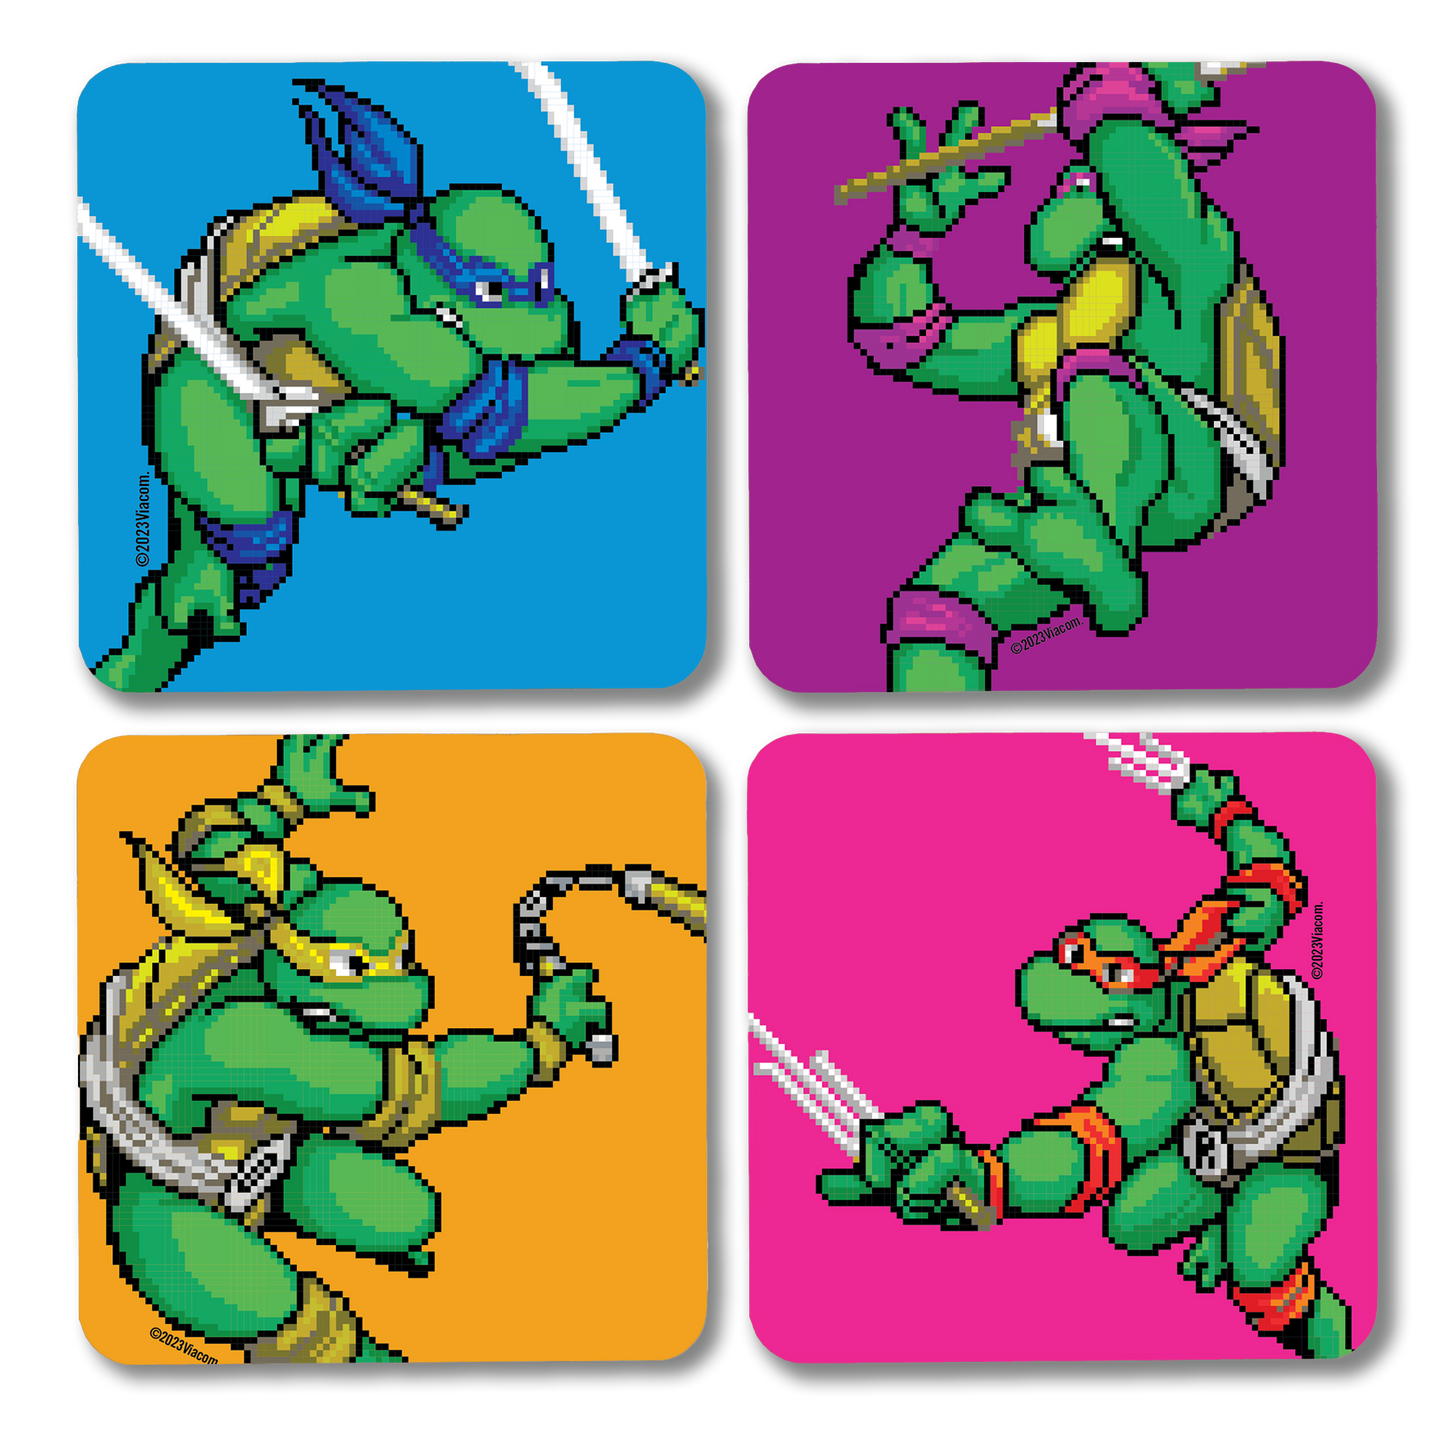 Teenage Mutant Ninja Turtles Ninjas Kampfhaltung Untersetzer mit Mahagoni-Halterung - 4er-Set